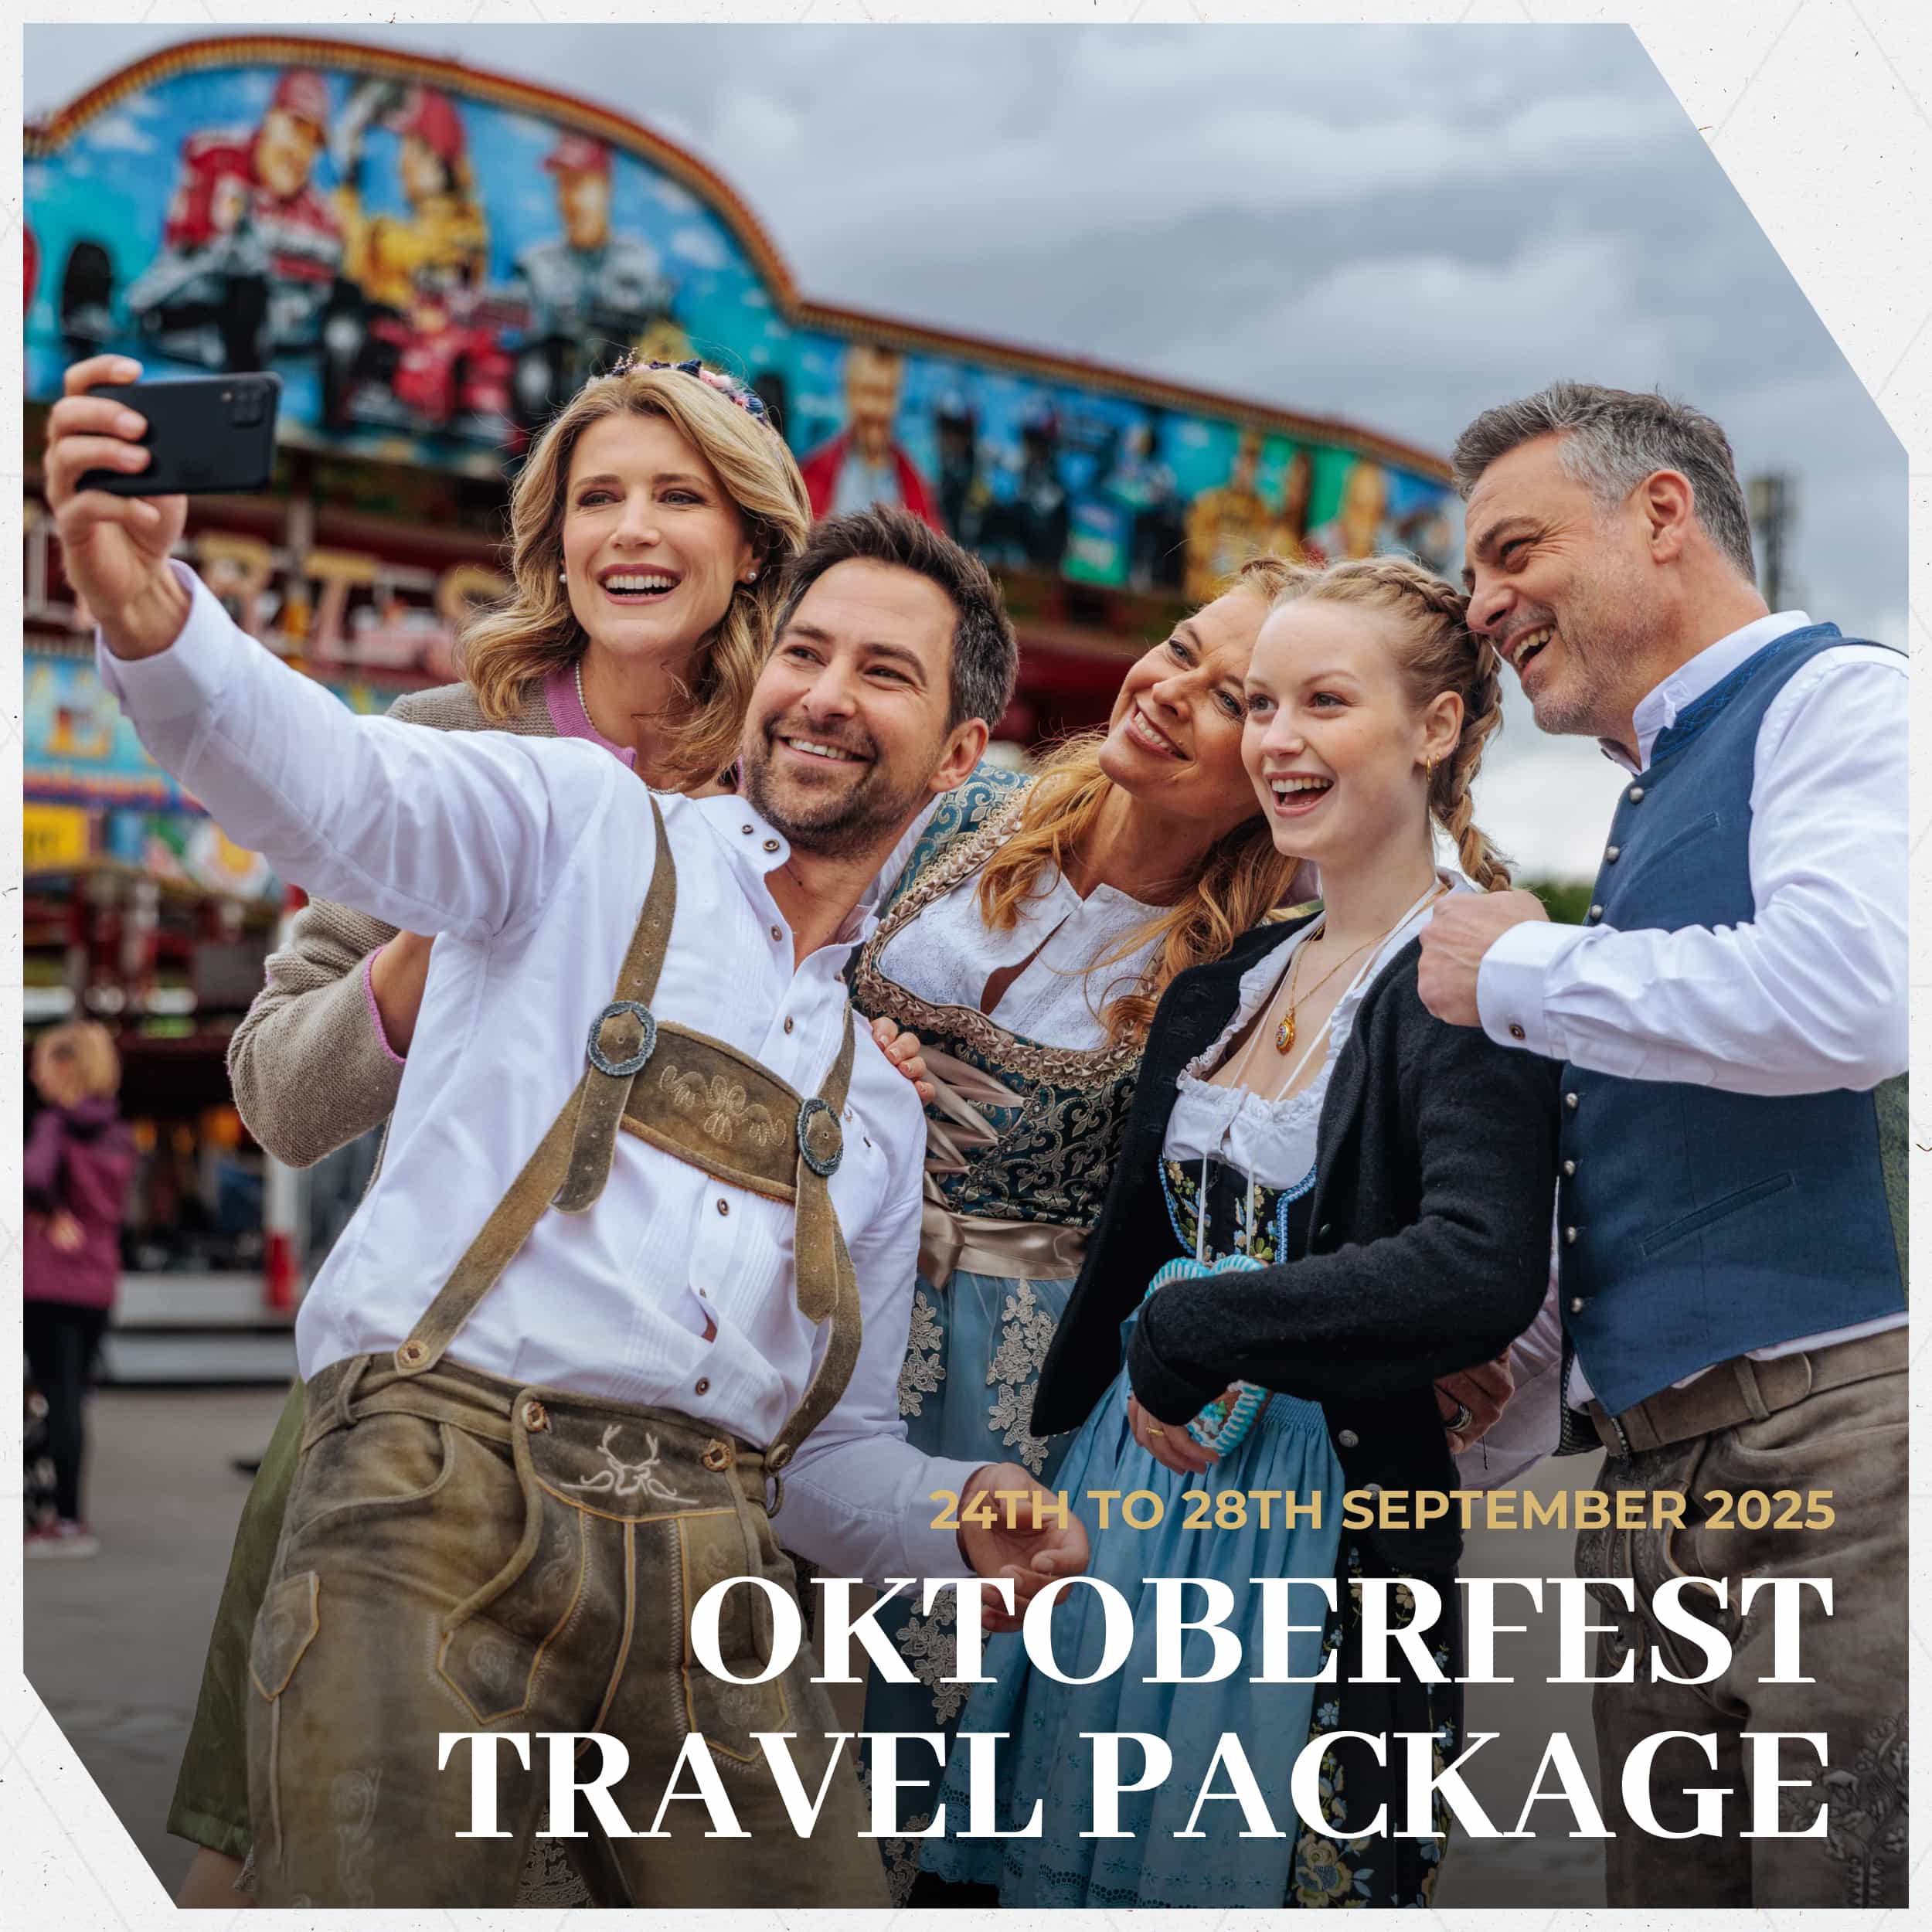 000 Bavaria Trachten Oktoberfest Travel Package 2025 Oktoberfest 